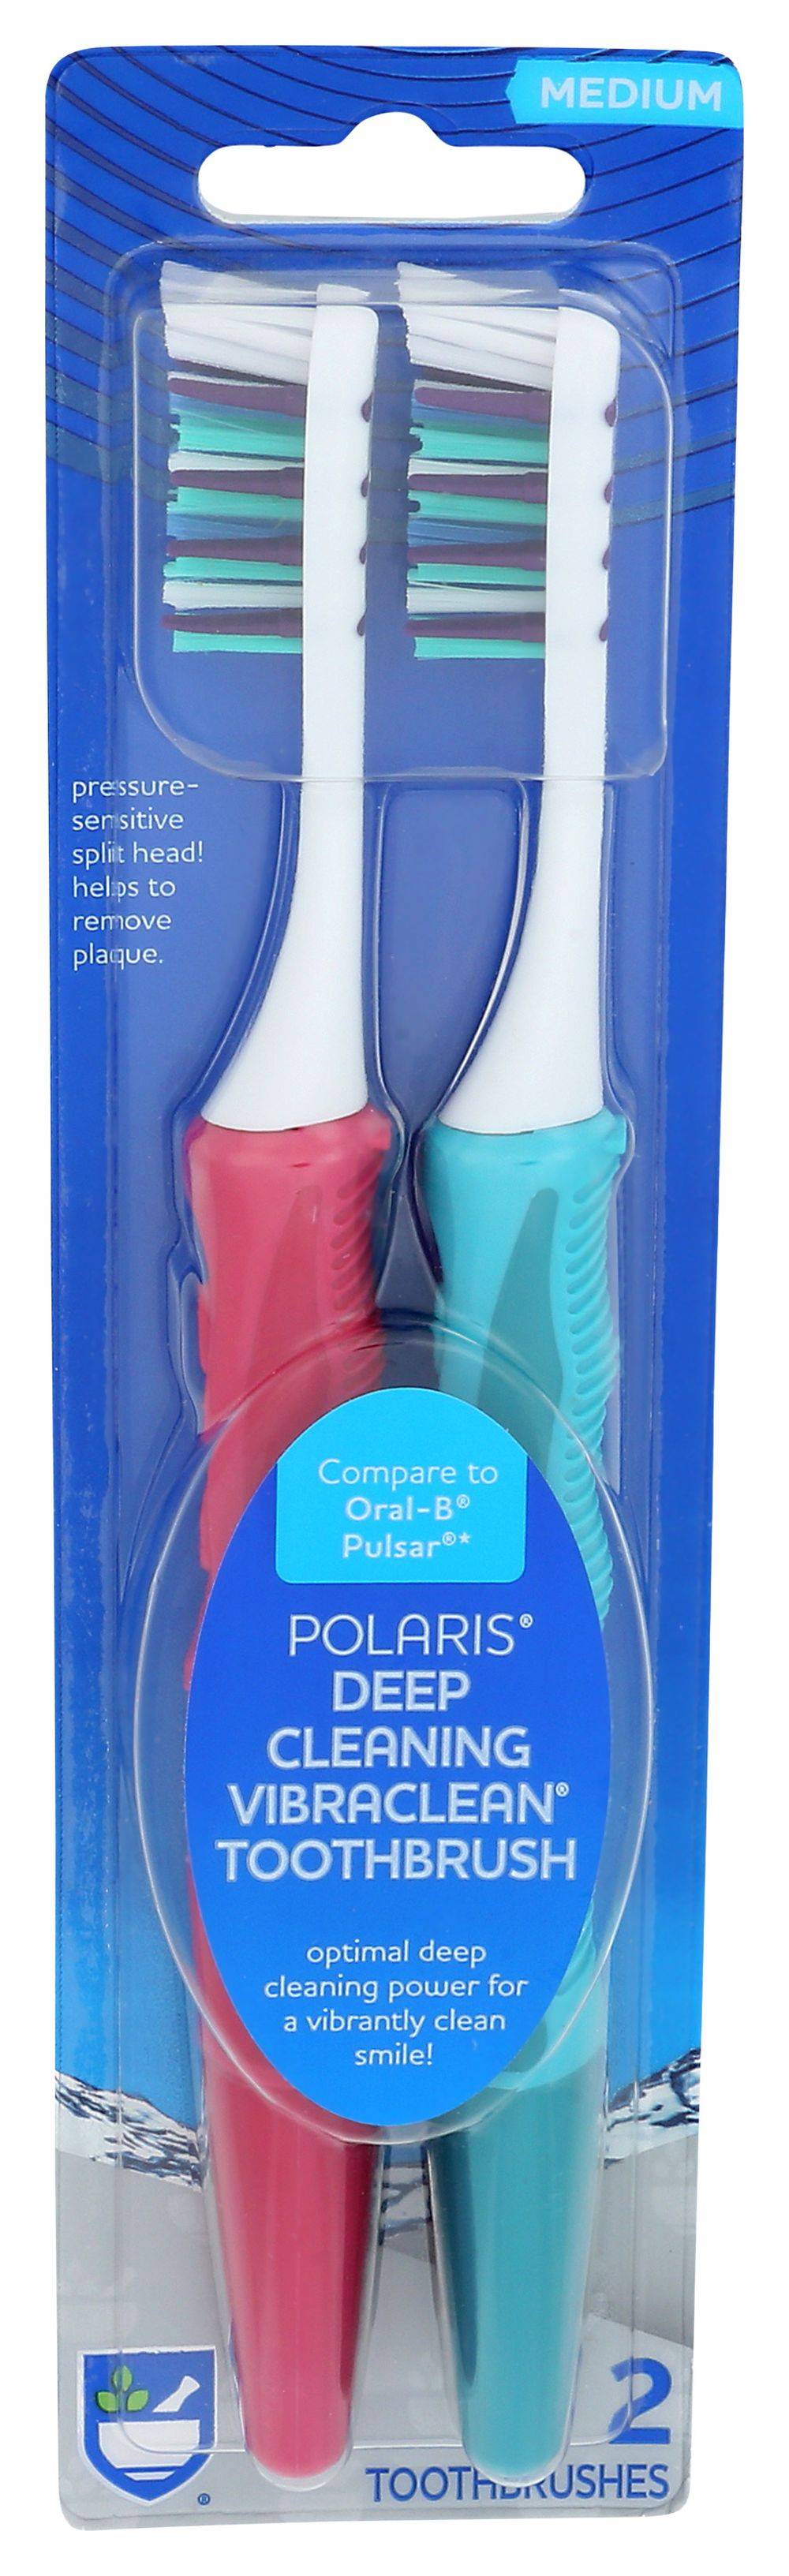 Rite Aid Polaris Power Toothbrush - Medium, 2 ct